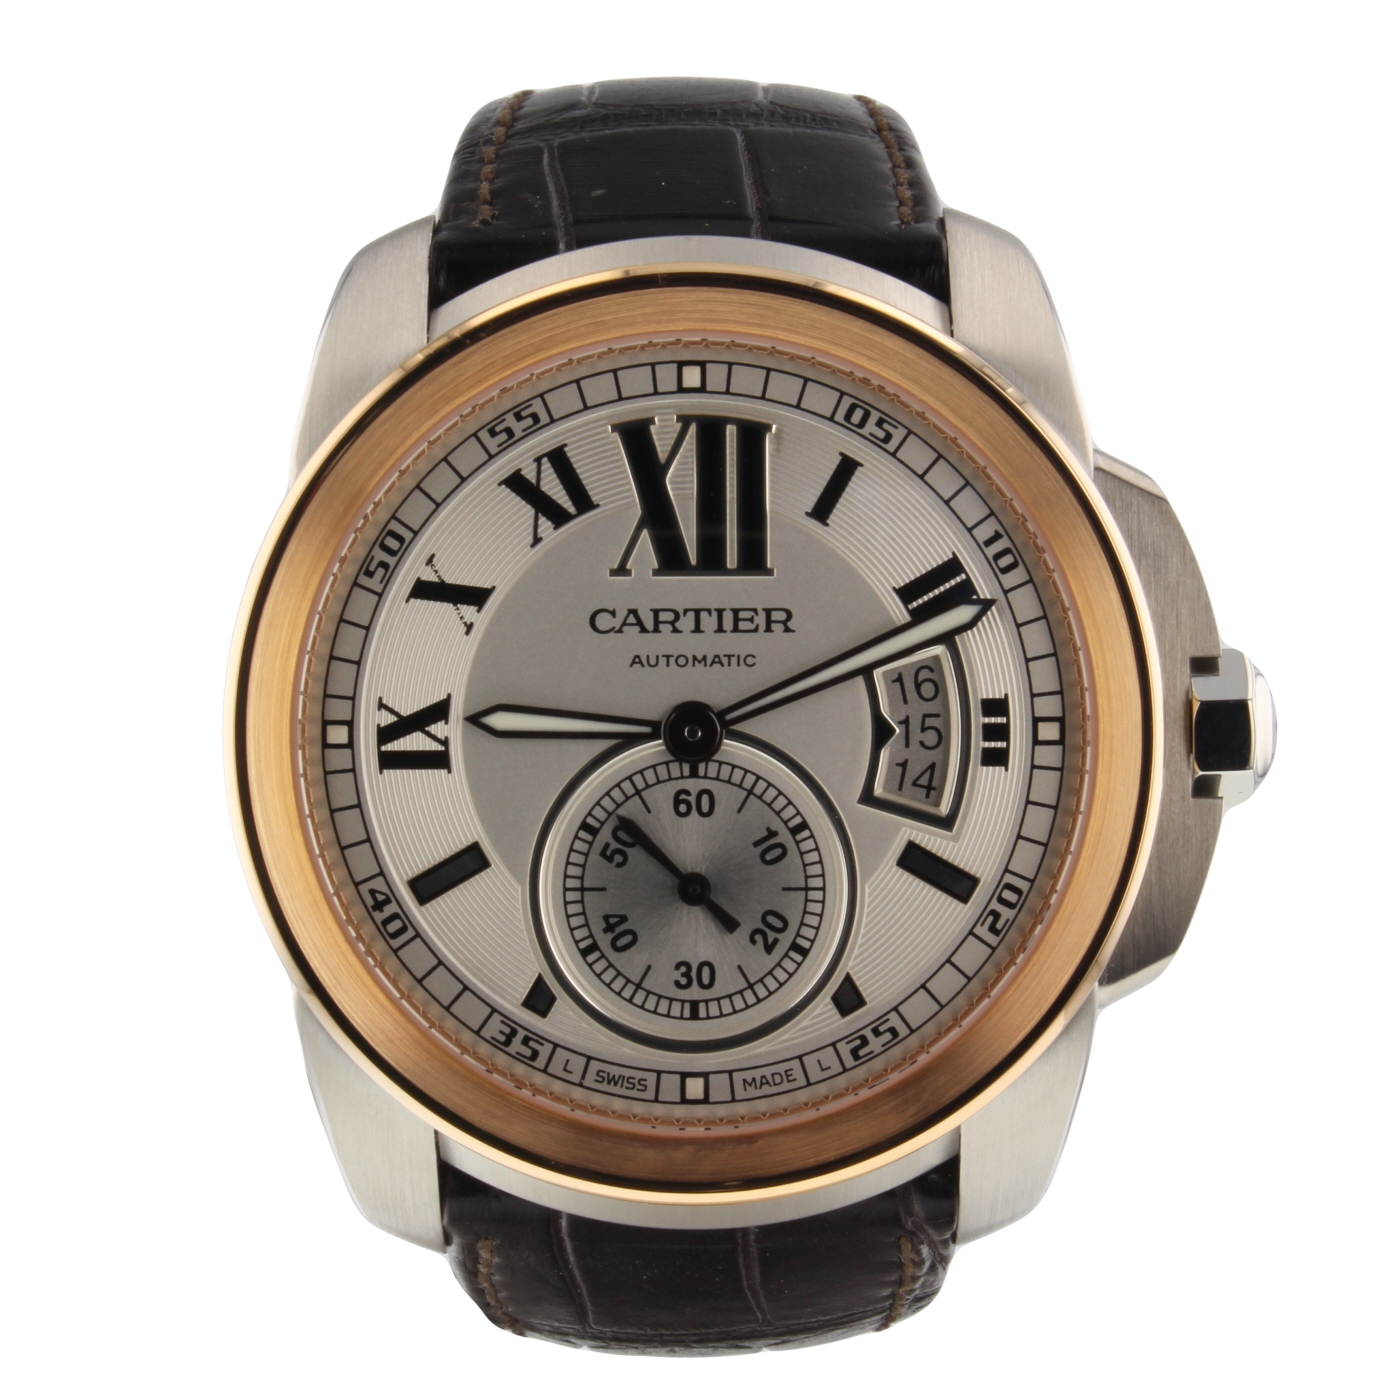 calibre de cartier watch large model 18k pink gold